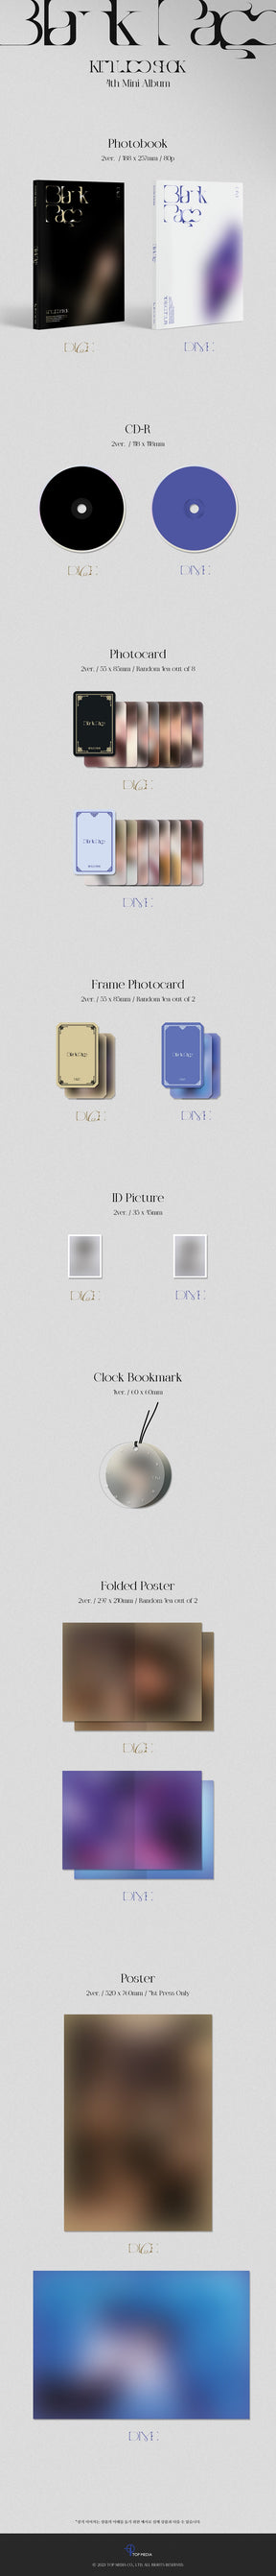 Kim Woo Seok Mini Album Vol. 4 - Blank Page